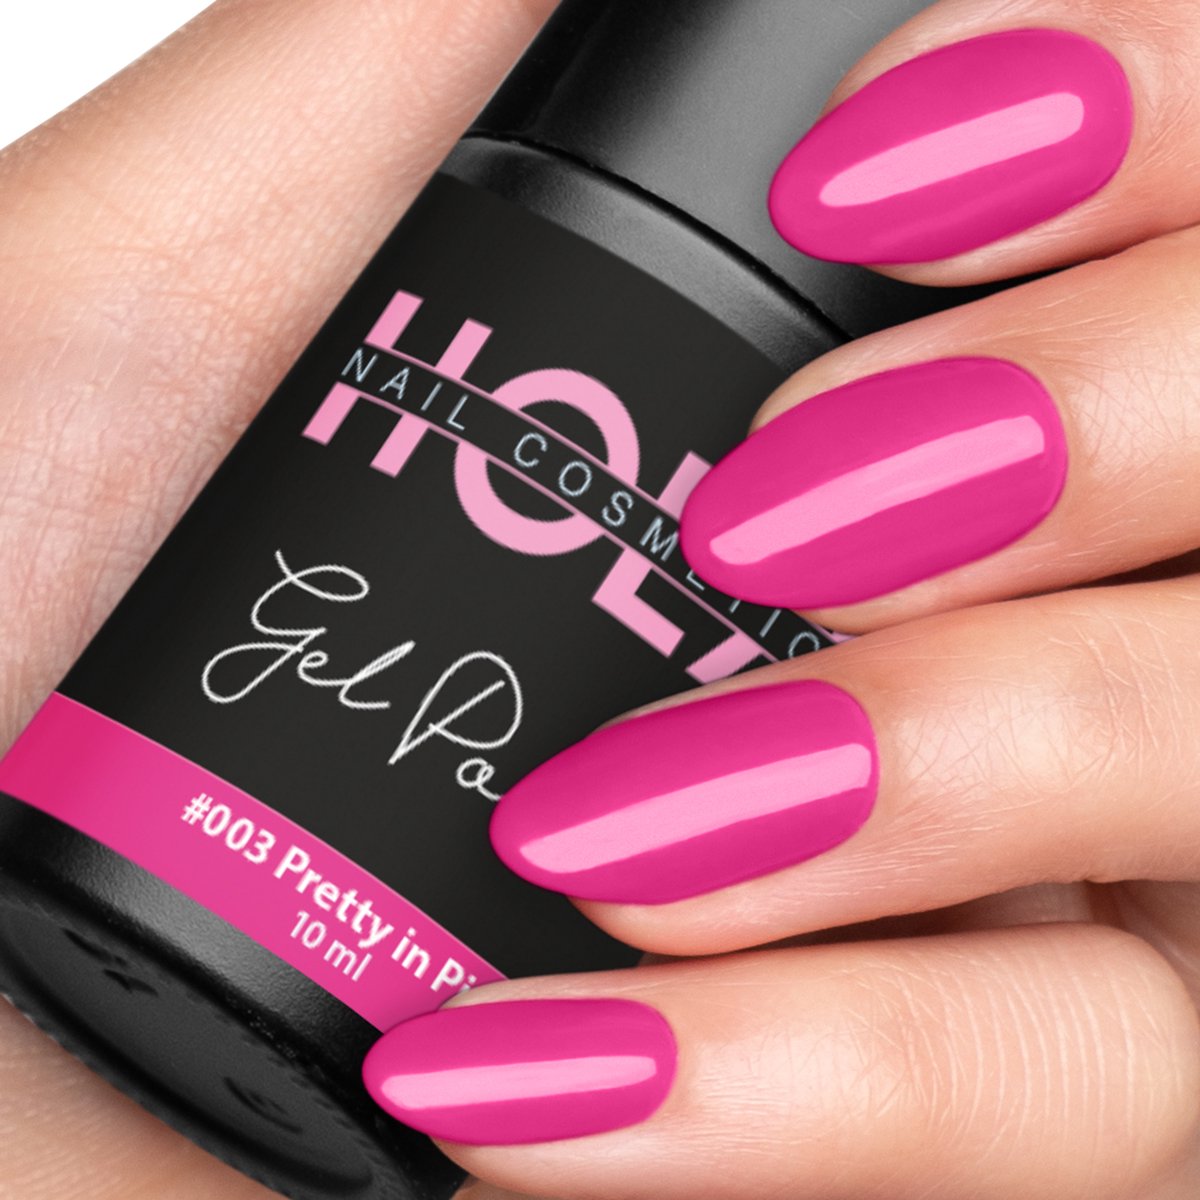 Hola Nail Cosmetica Gelpolish #003 Pretty in Pink (10ml)